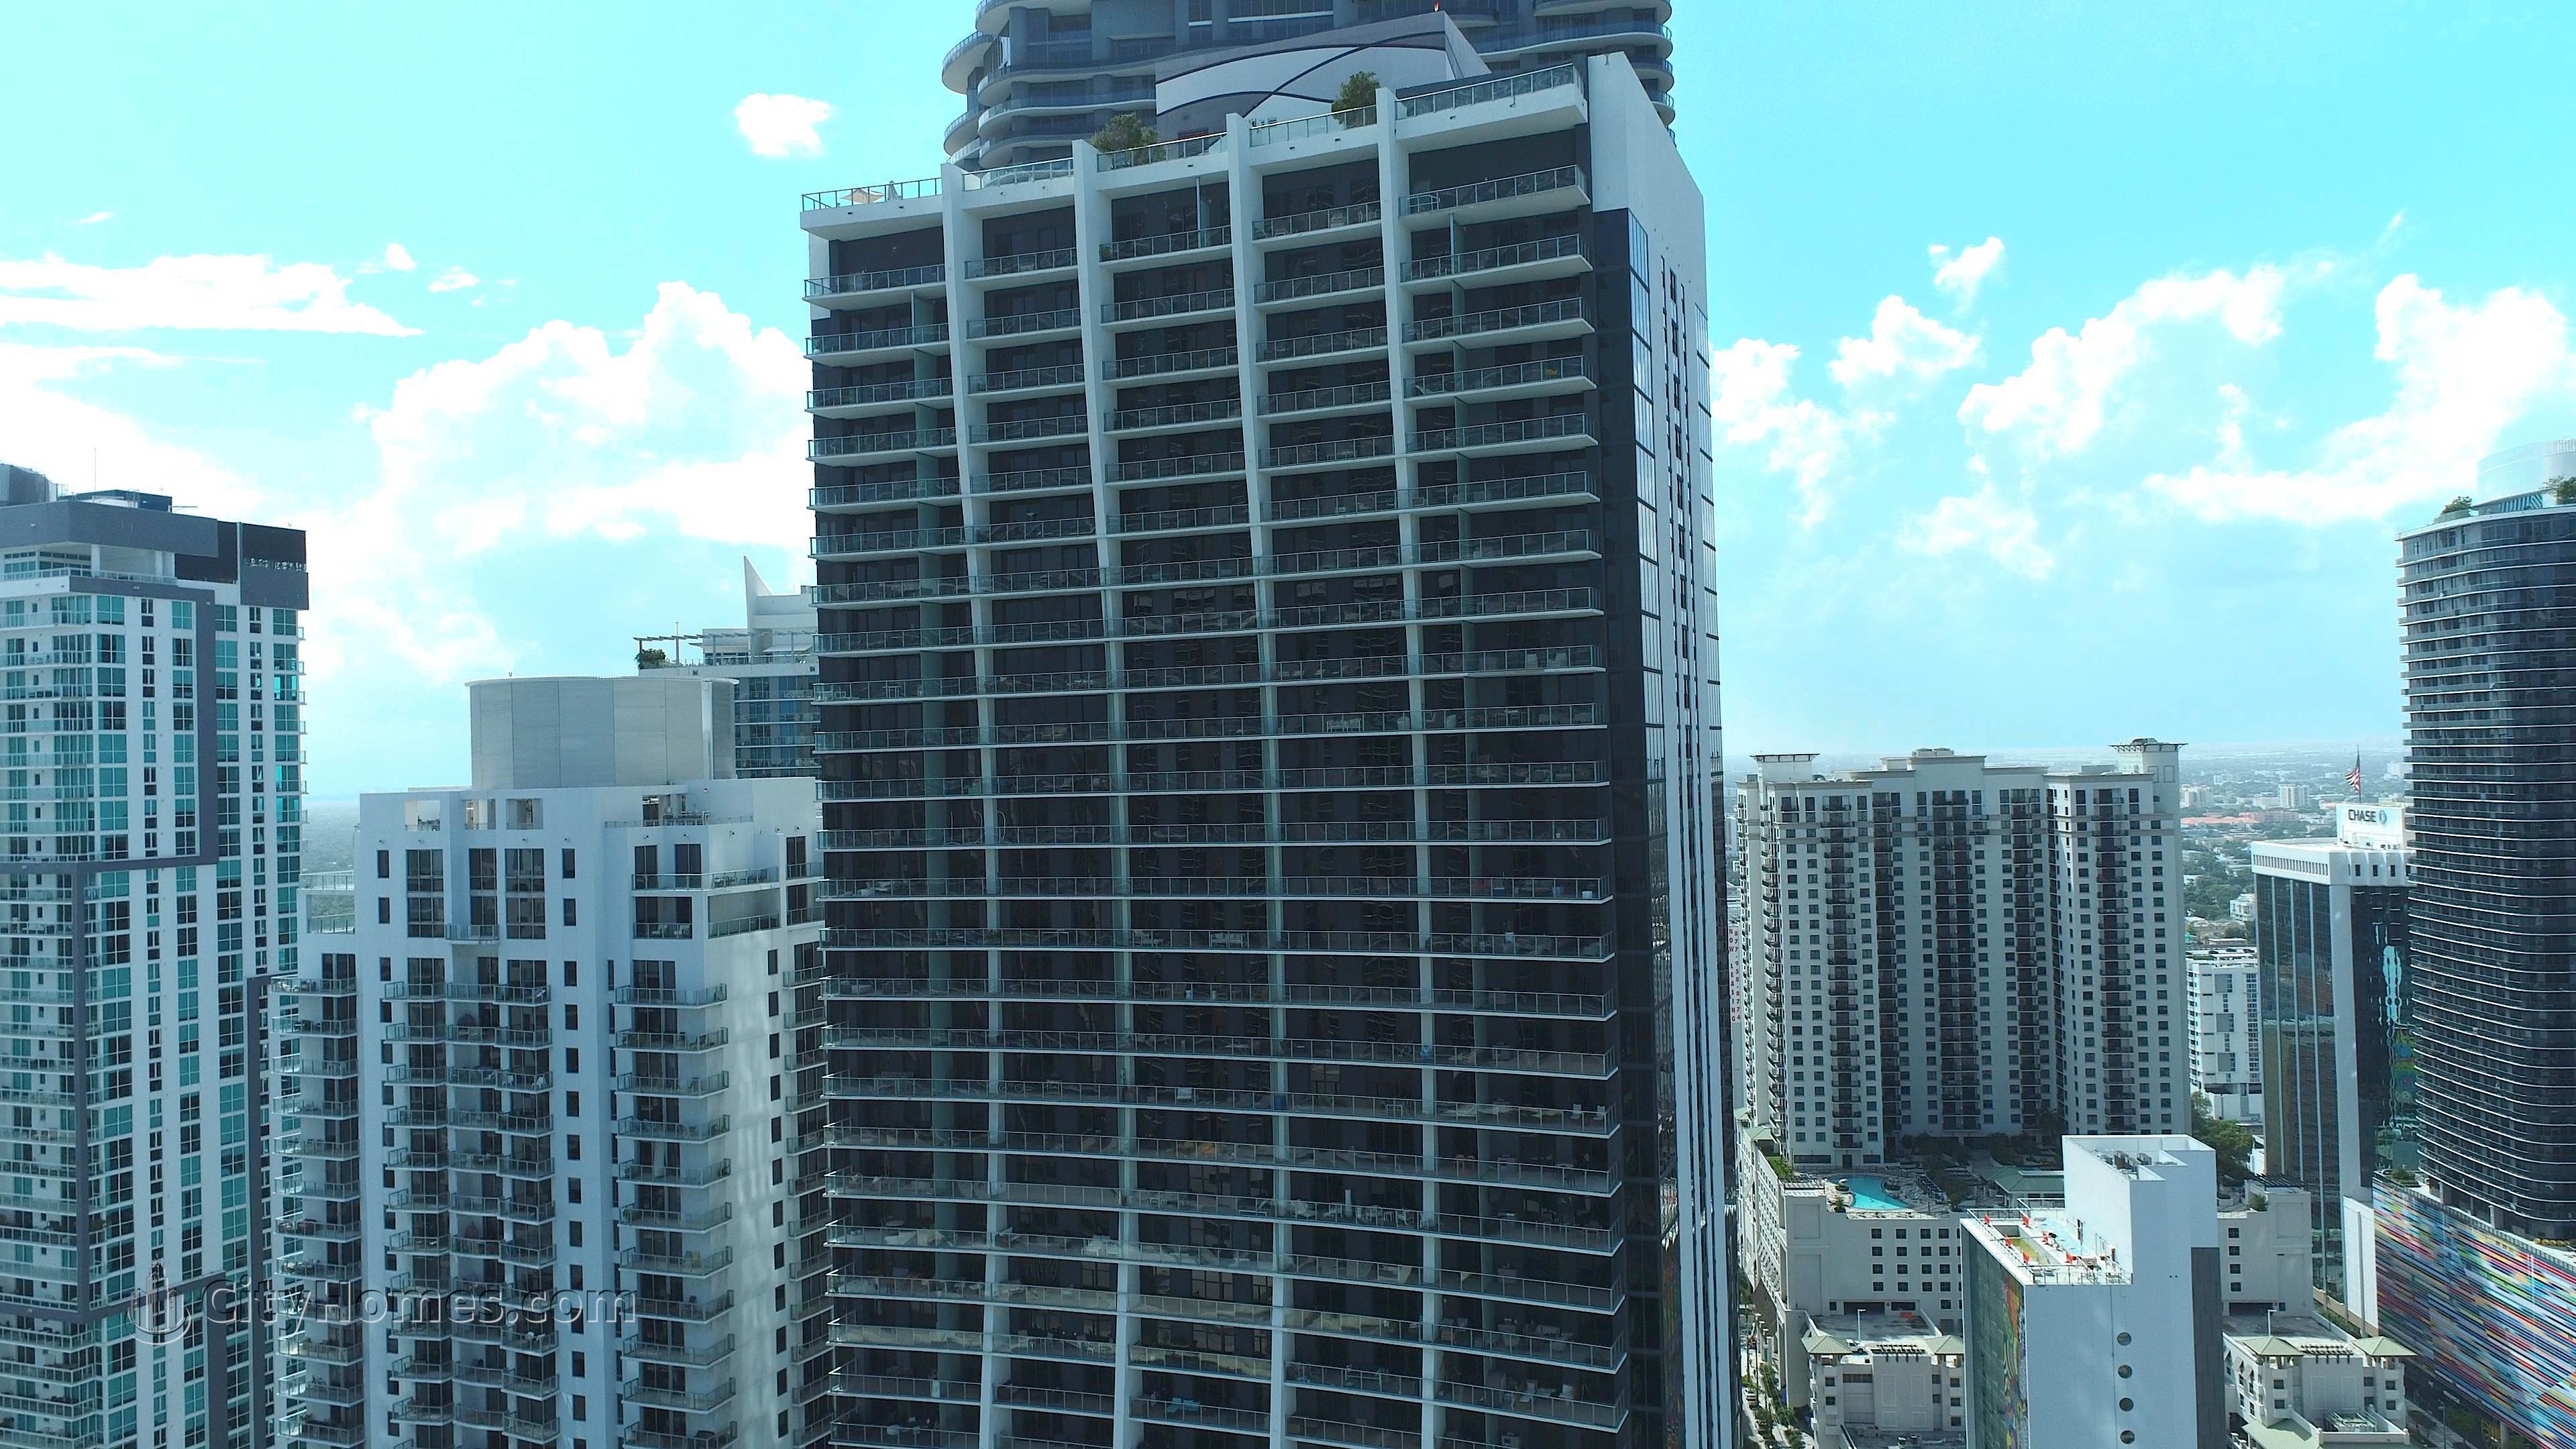 2. xây dựng tại 1010 Brickell Avenue, Brickell, Miami, FL 33131